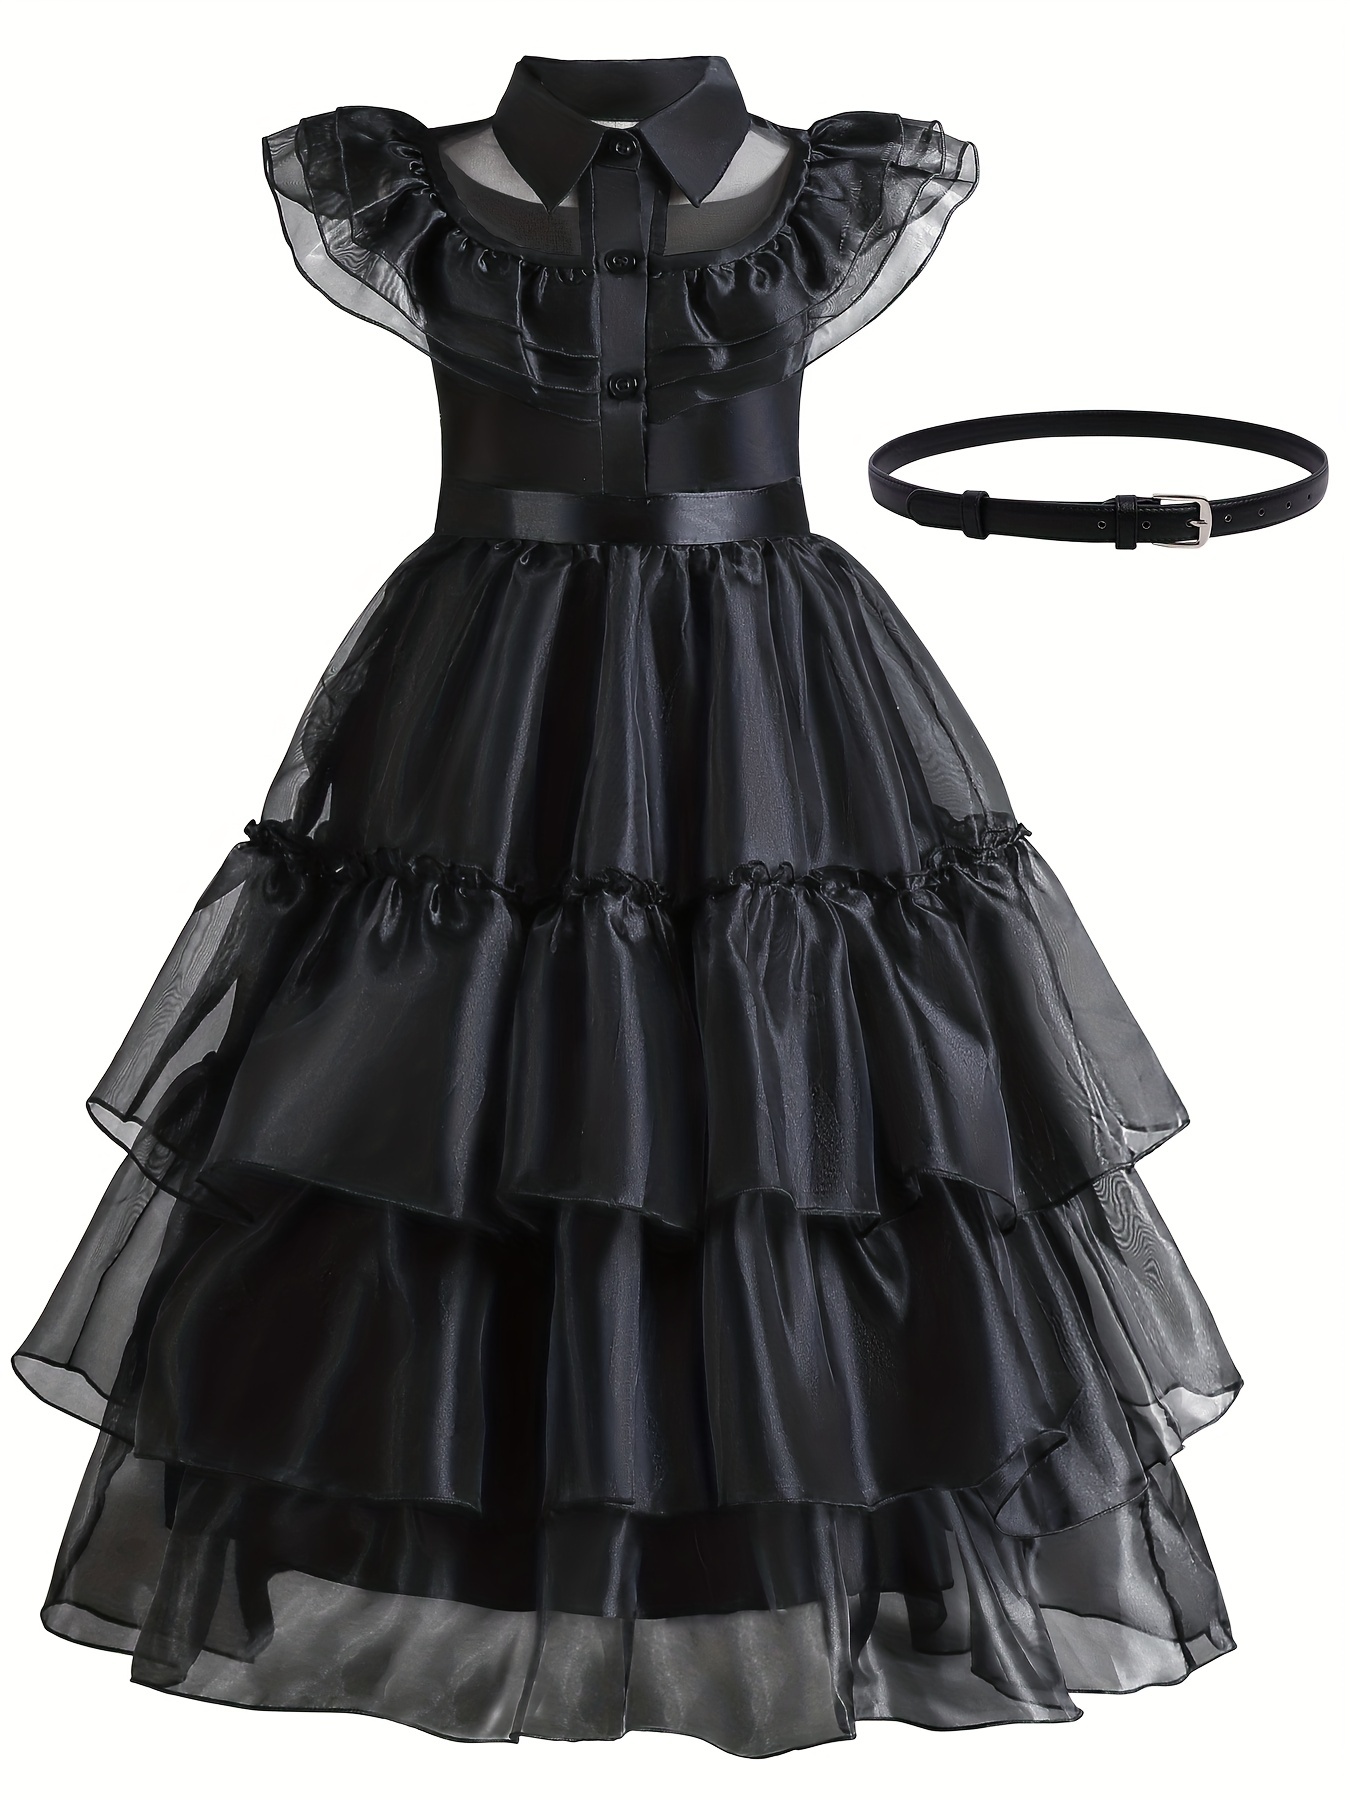 Mercredi Addams robe Cosplay pour fille enfants robes gothiques noires  mercredi Cosplay Costumes Halloween fête femmes vêtements 